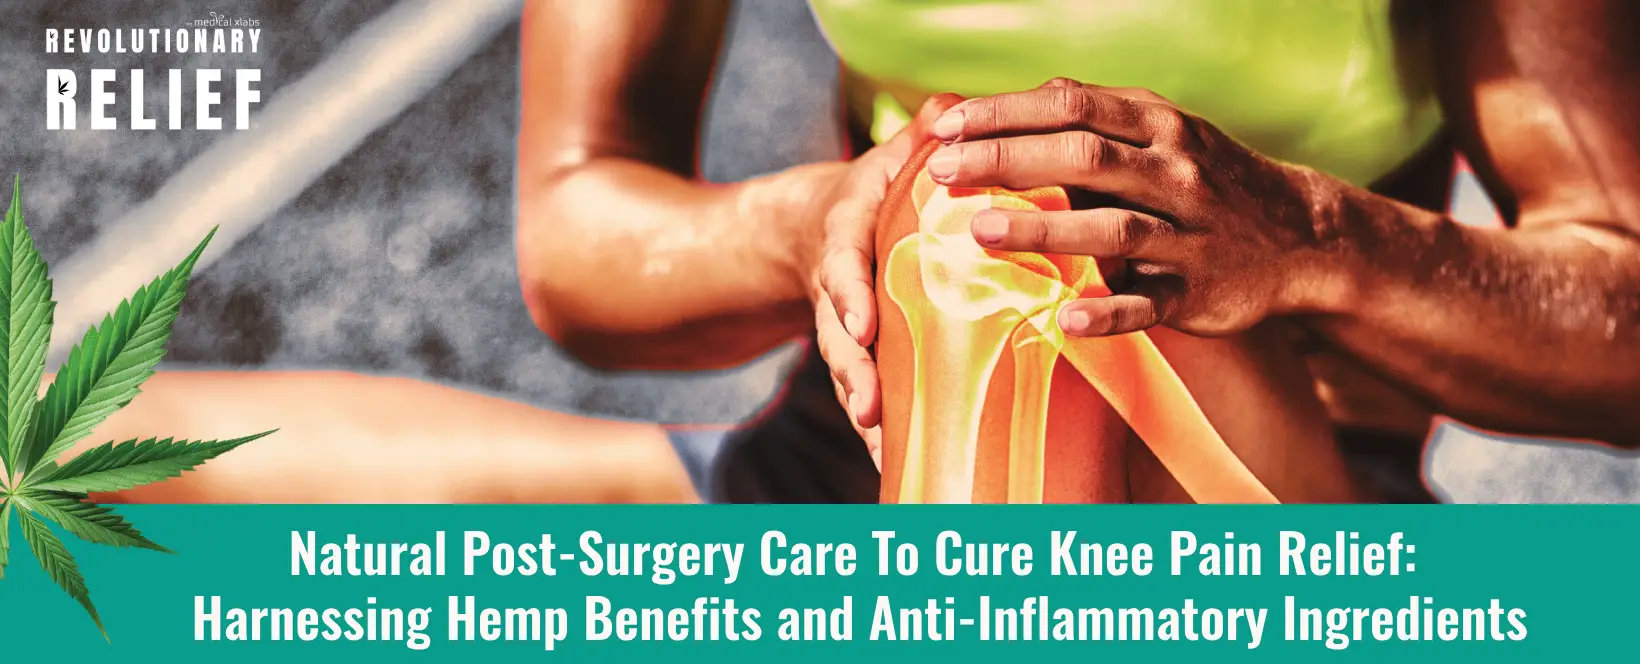  Harnessing Hemp Benefits and Anti-Inflammatory Ingredients